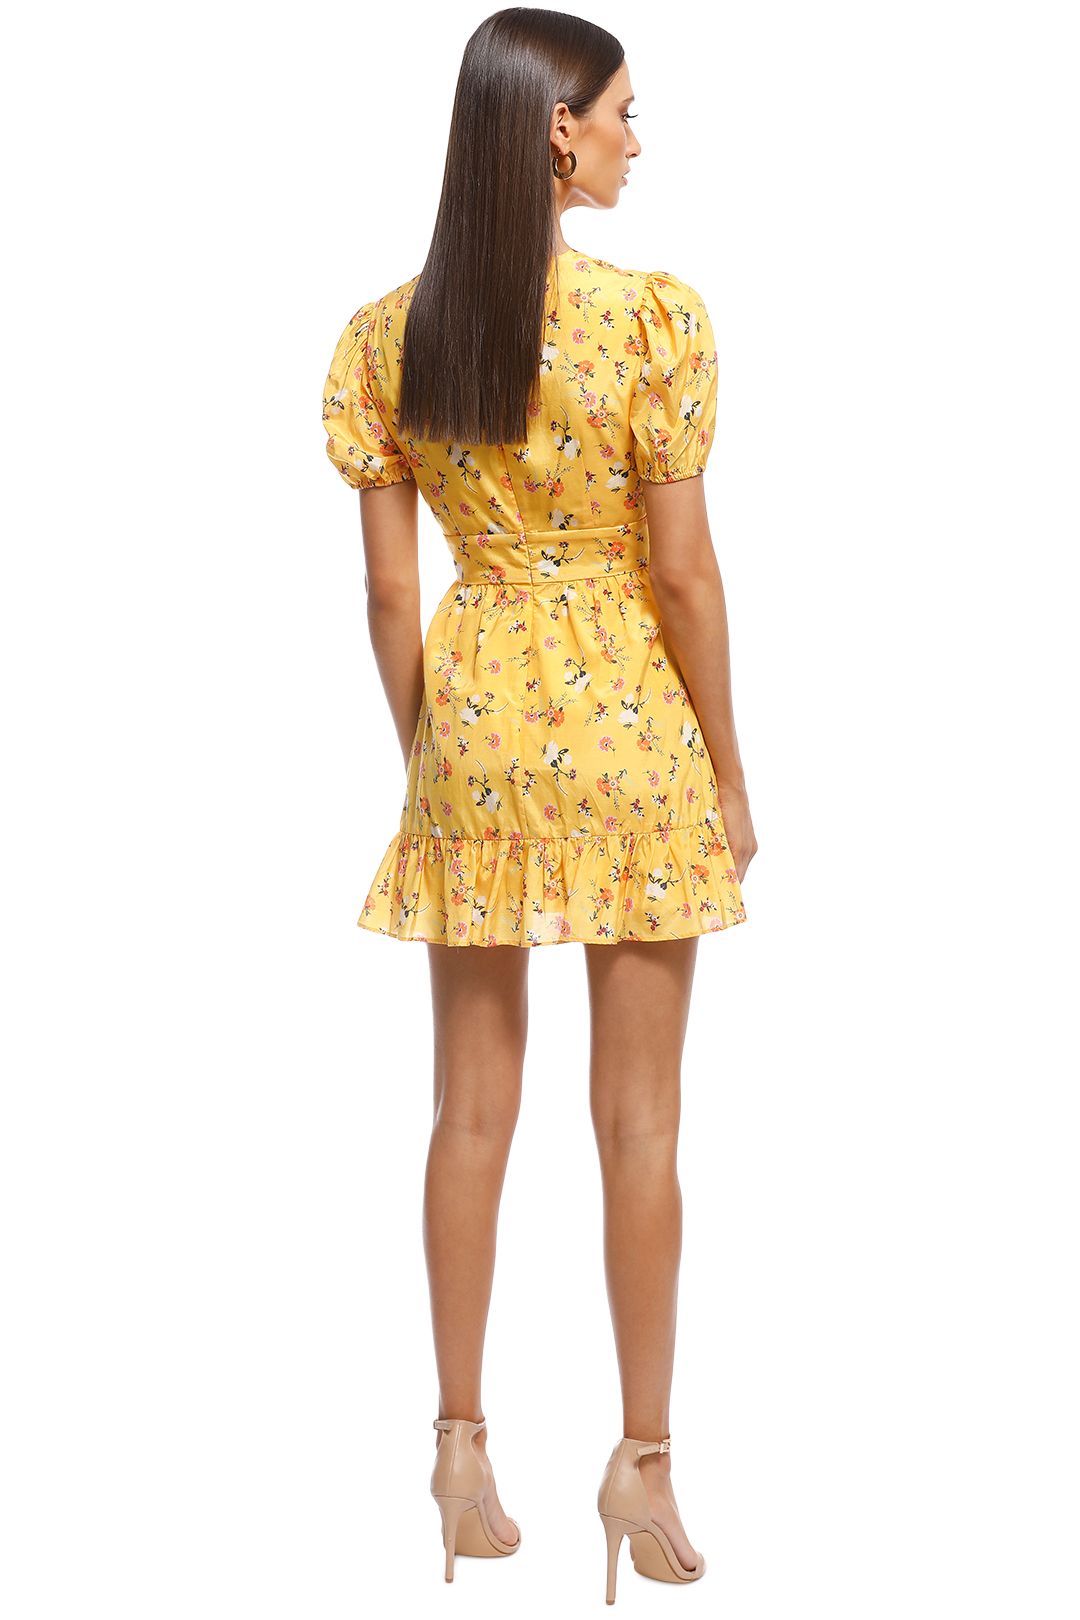 Talulah - Tansy Mini Dress - Yellow - Back